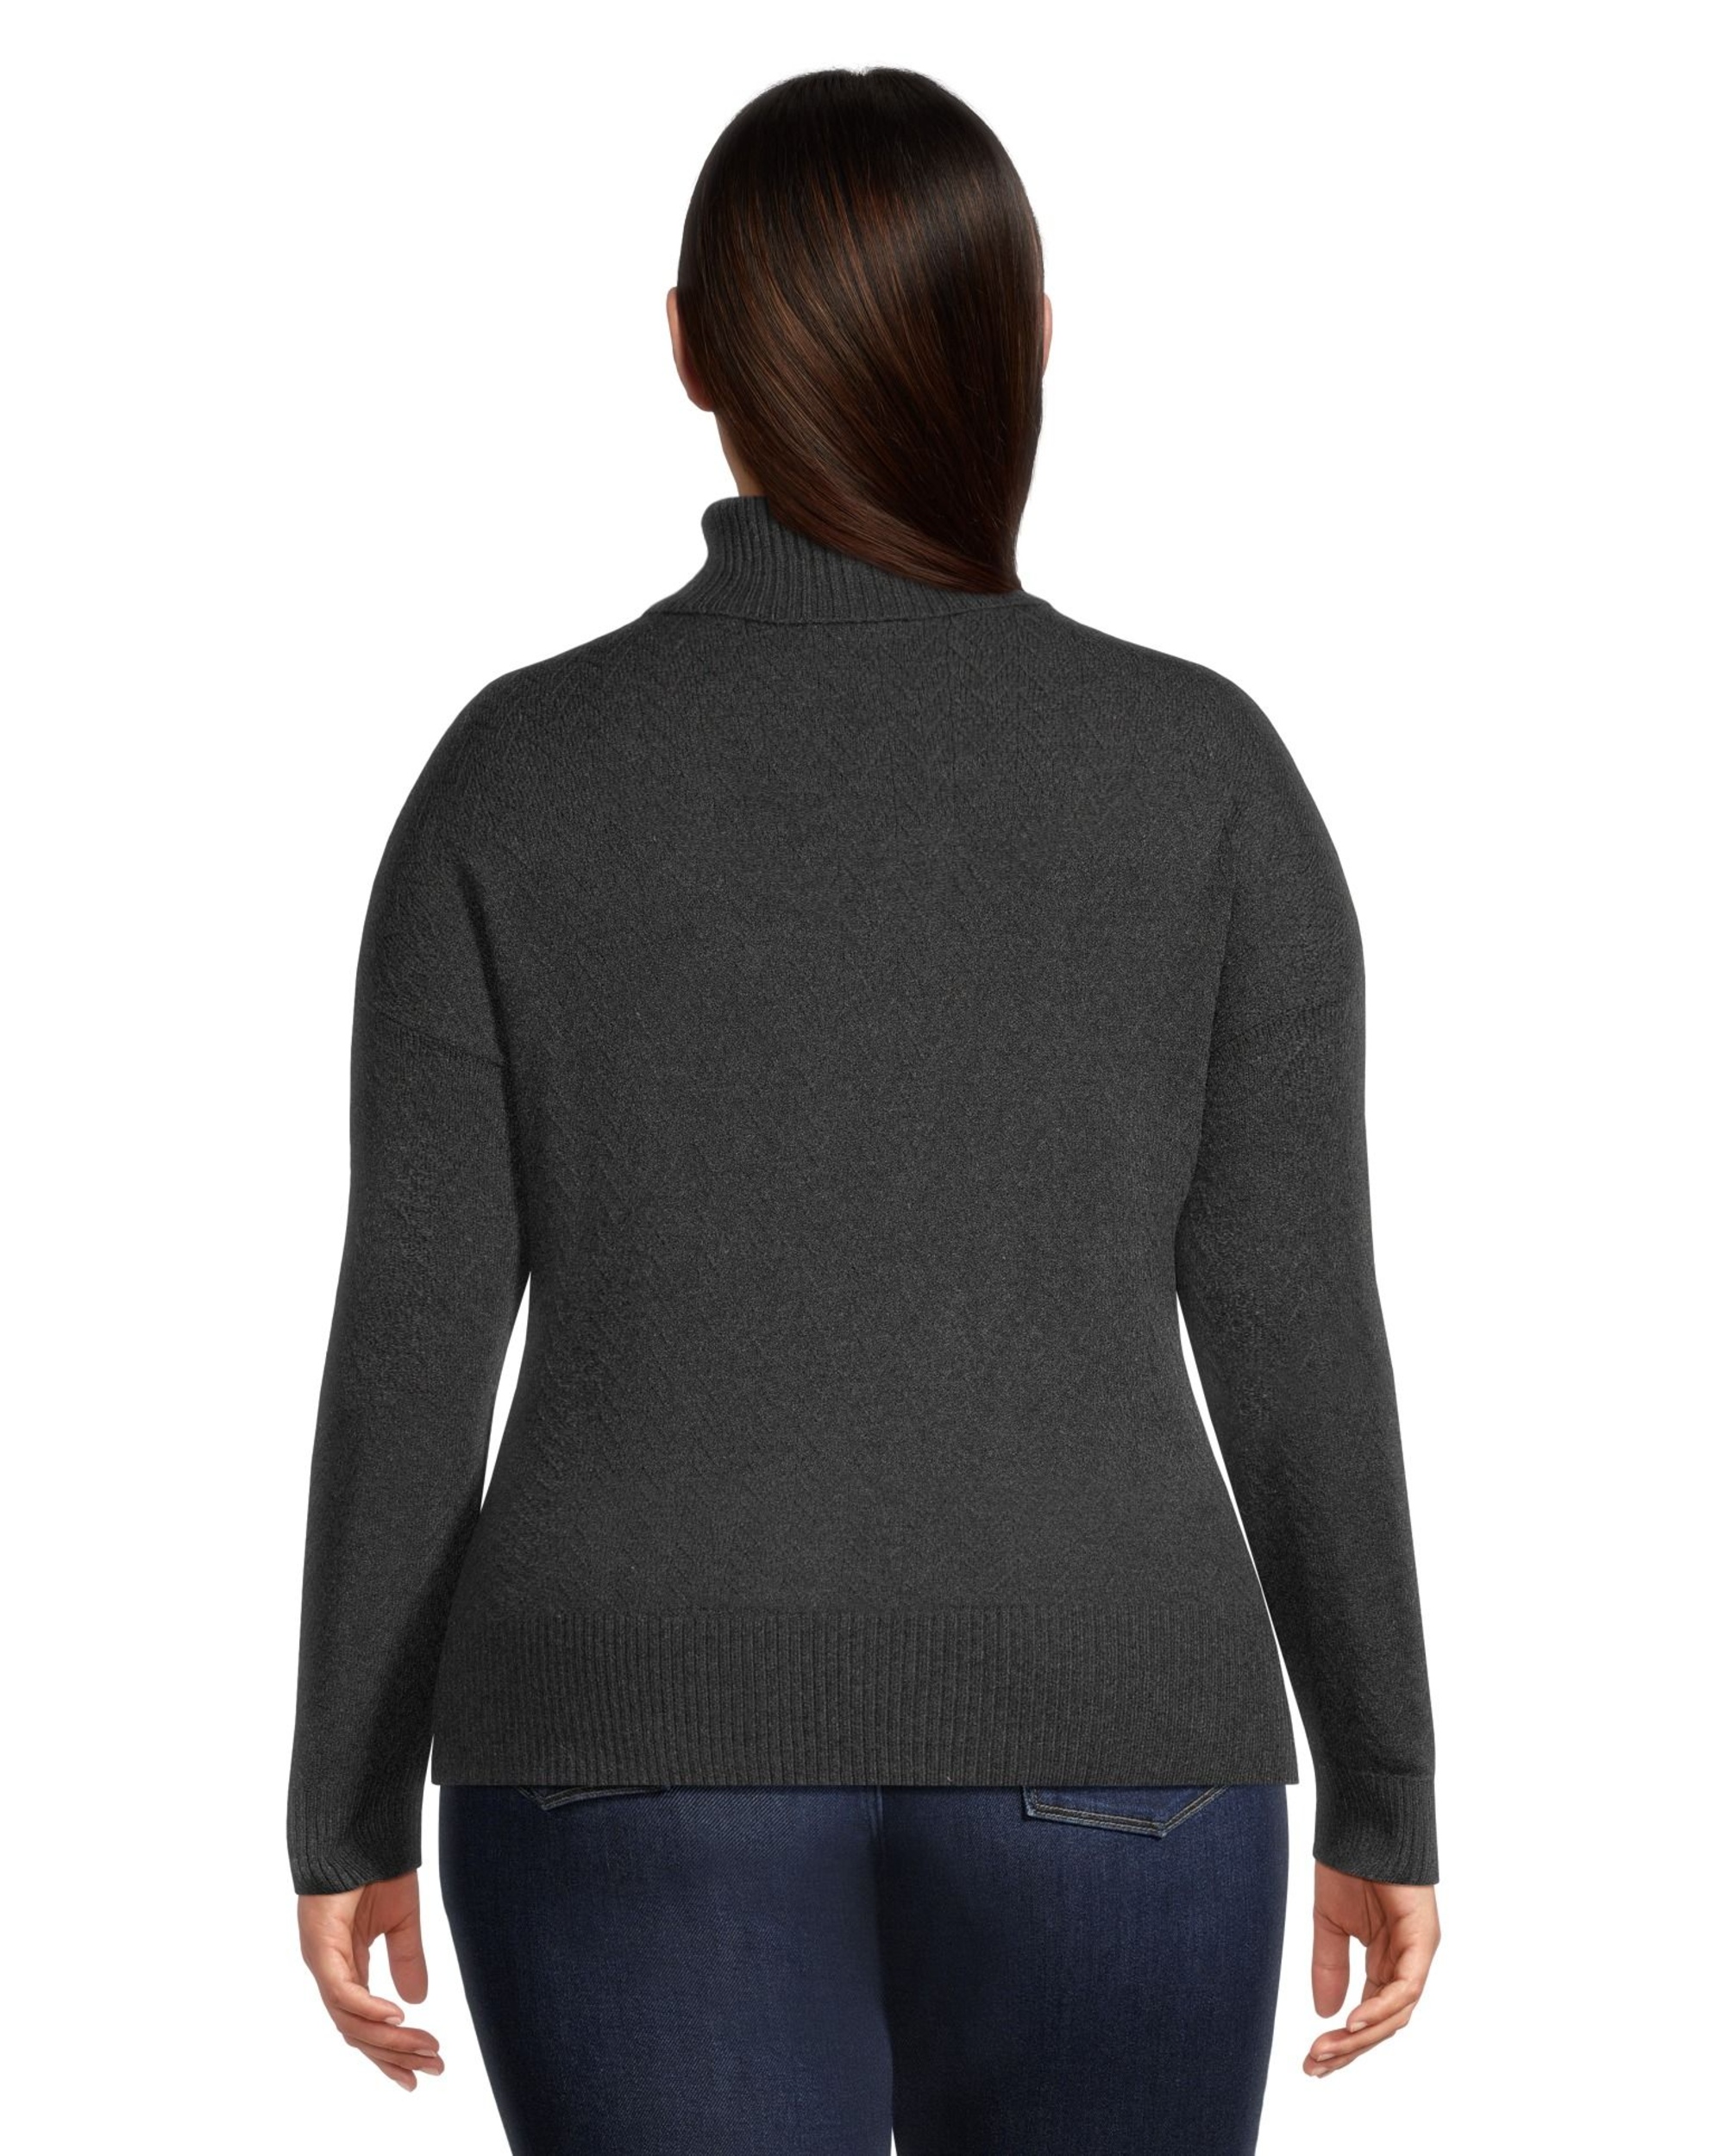 Denver Hayes Women's Cozy Chevron Turtleneck Pullover Sweater | Marks